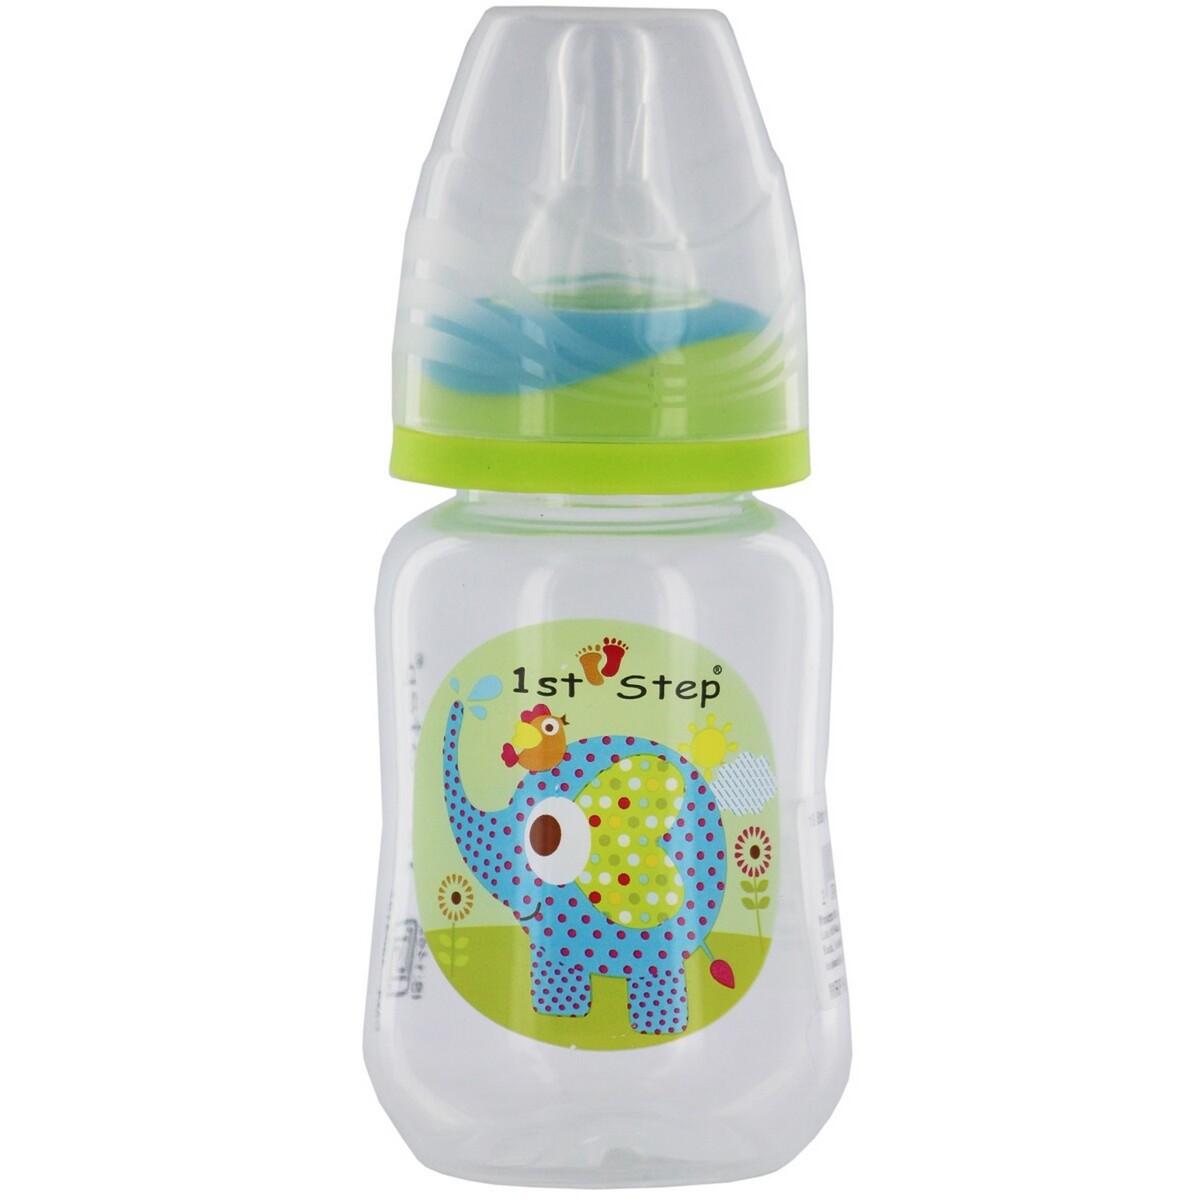 1st Step Baby Feeding Bottle ST-505 125ml